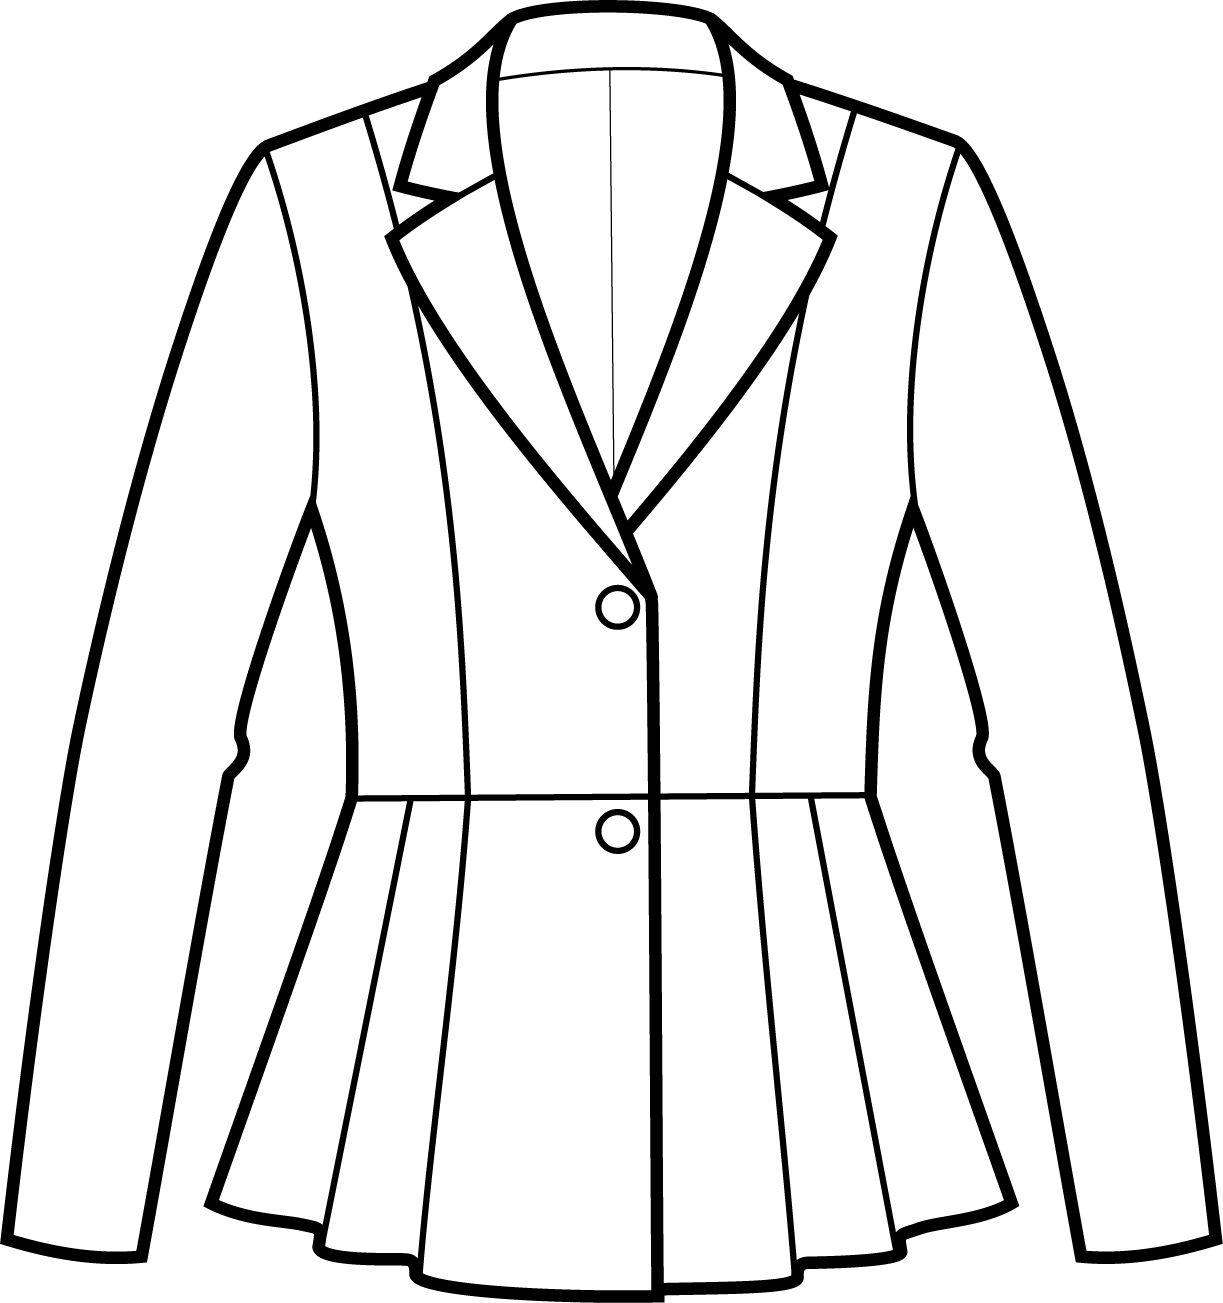 Peplum Style Jacket